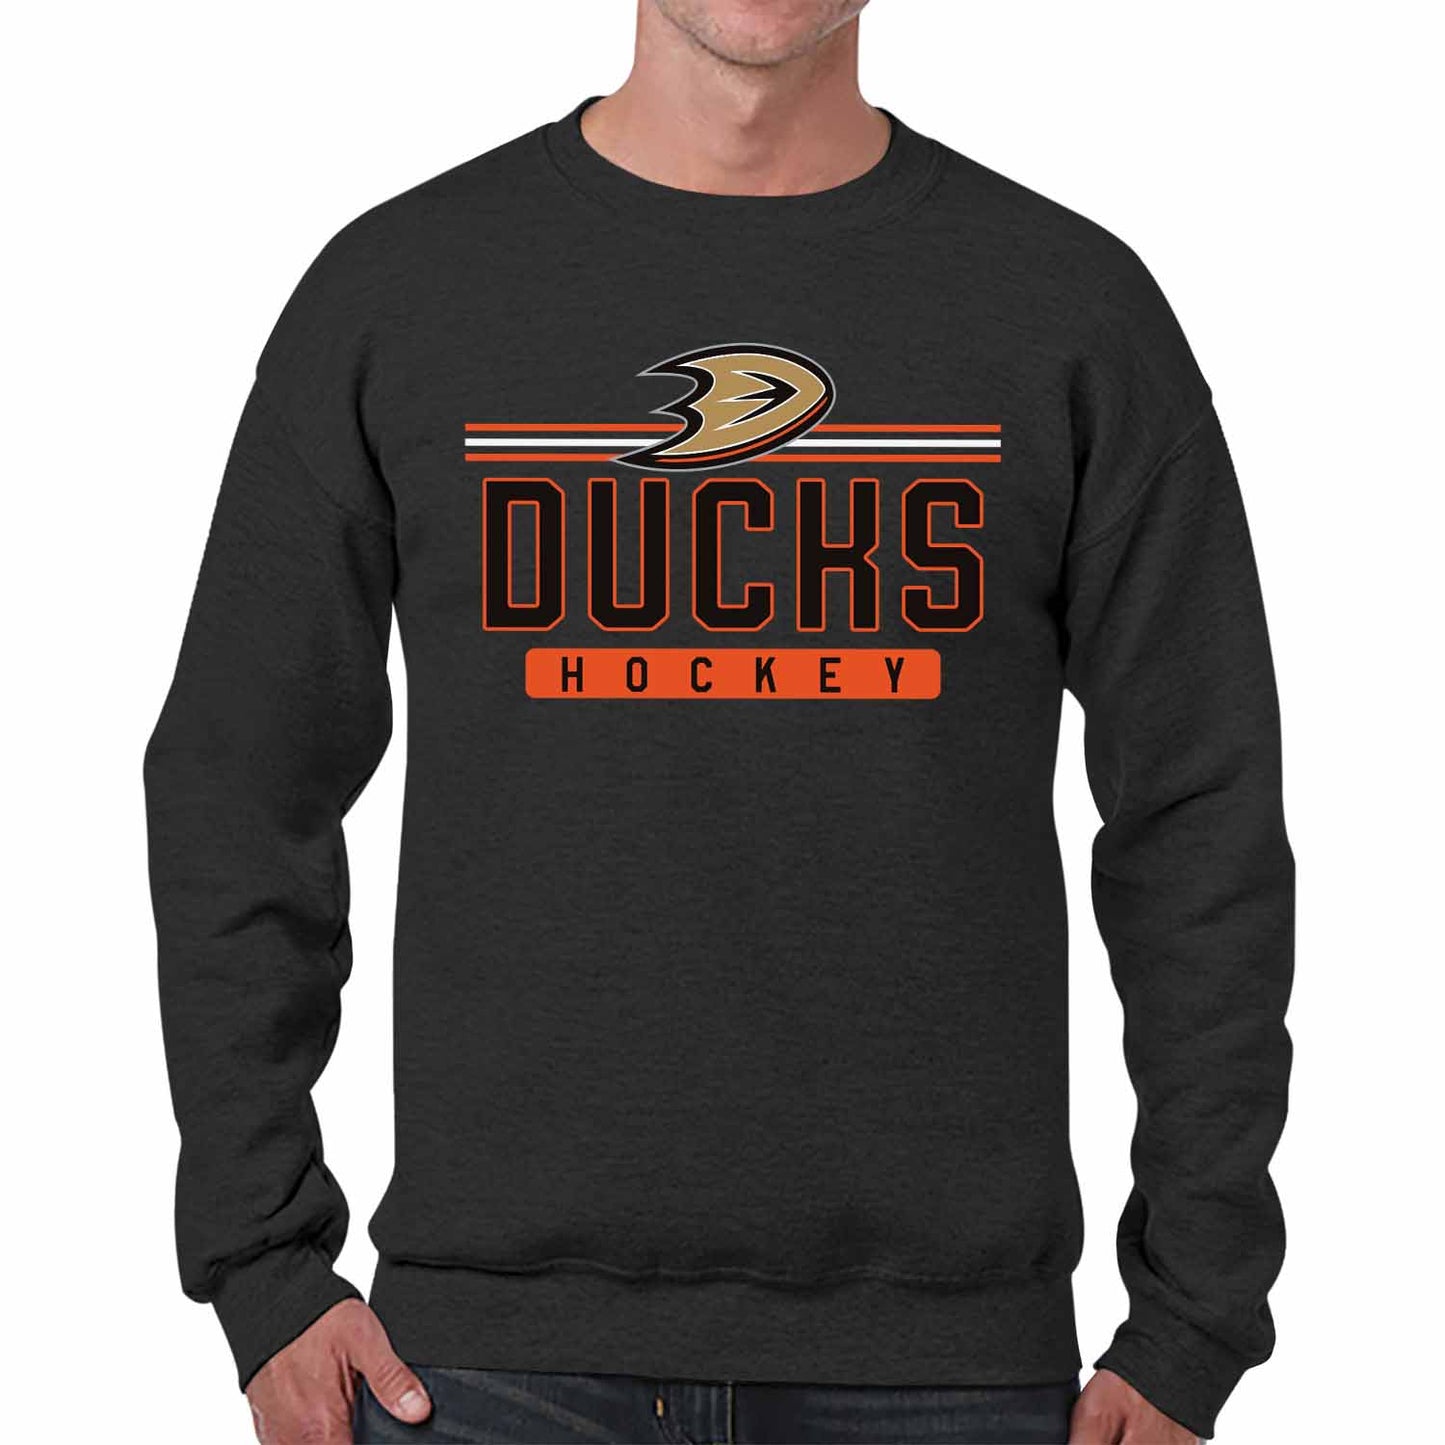 Anaheim Ducks NHL Charcoal True Fan Crewneck Sweatshirt - Charcoal